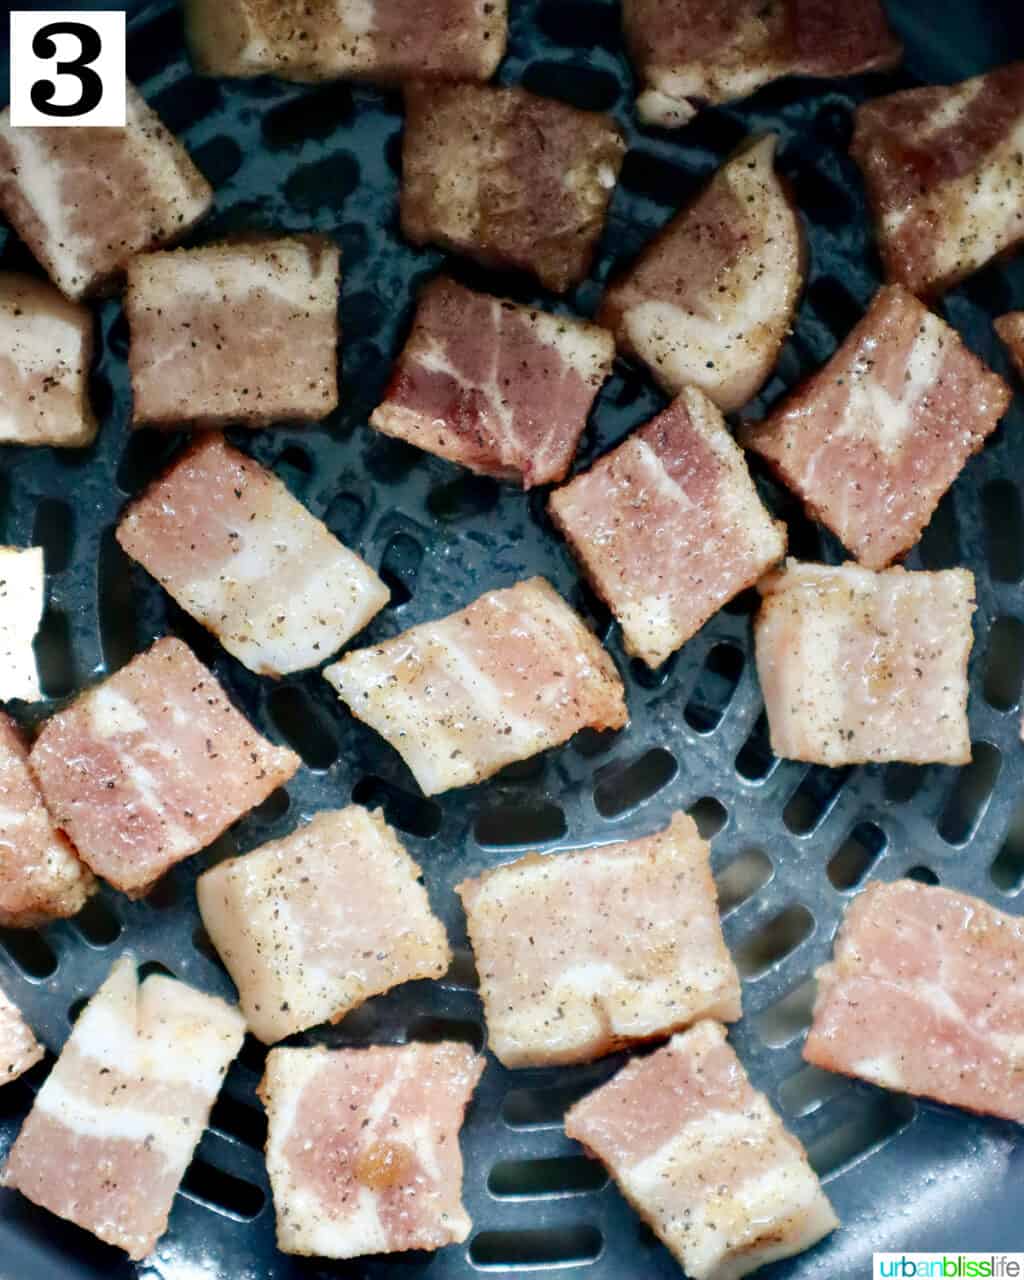 pork belly bites in an air fryer basket, uncooked.